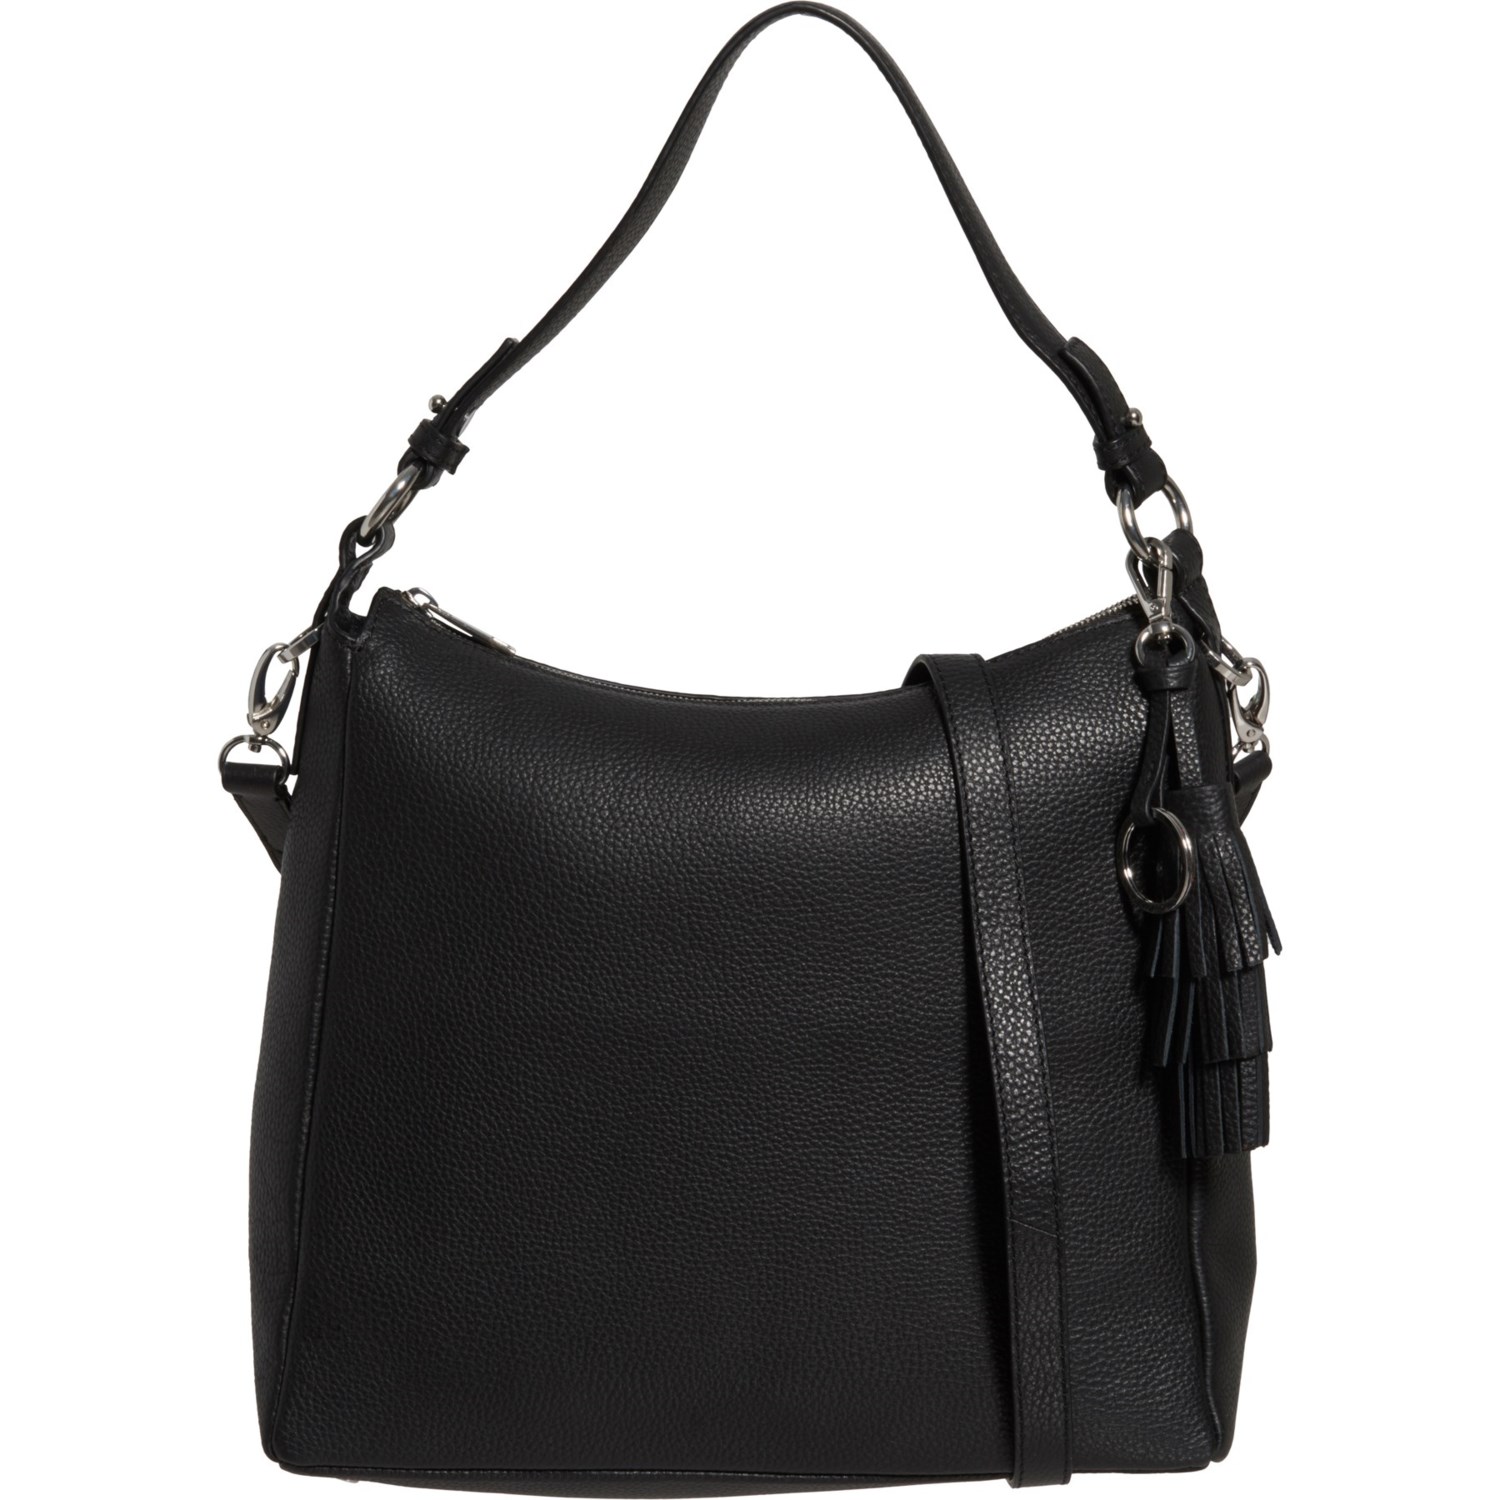 Valentina Hobo Bag (For Women) - Save 41%